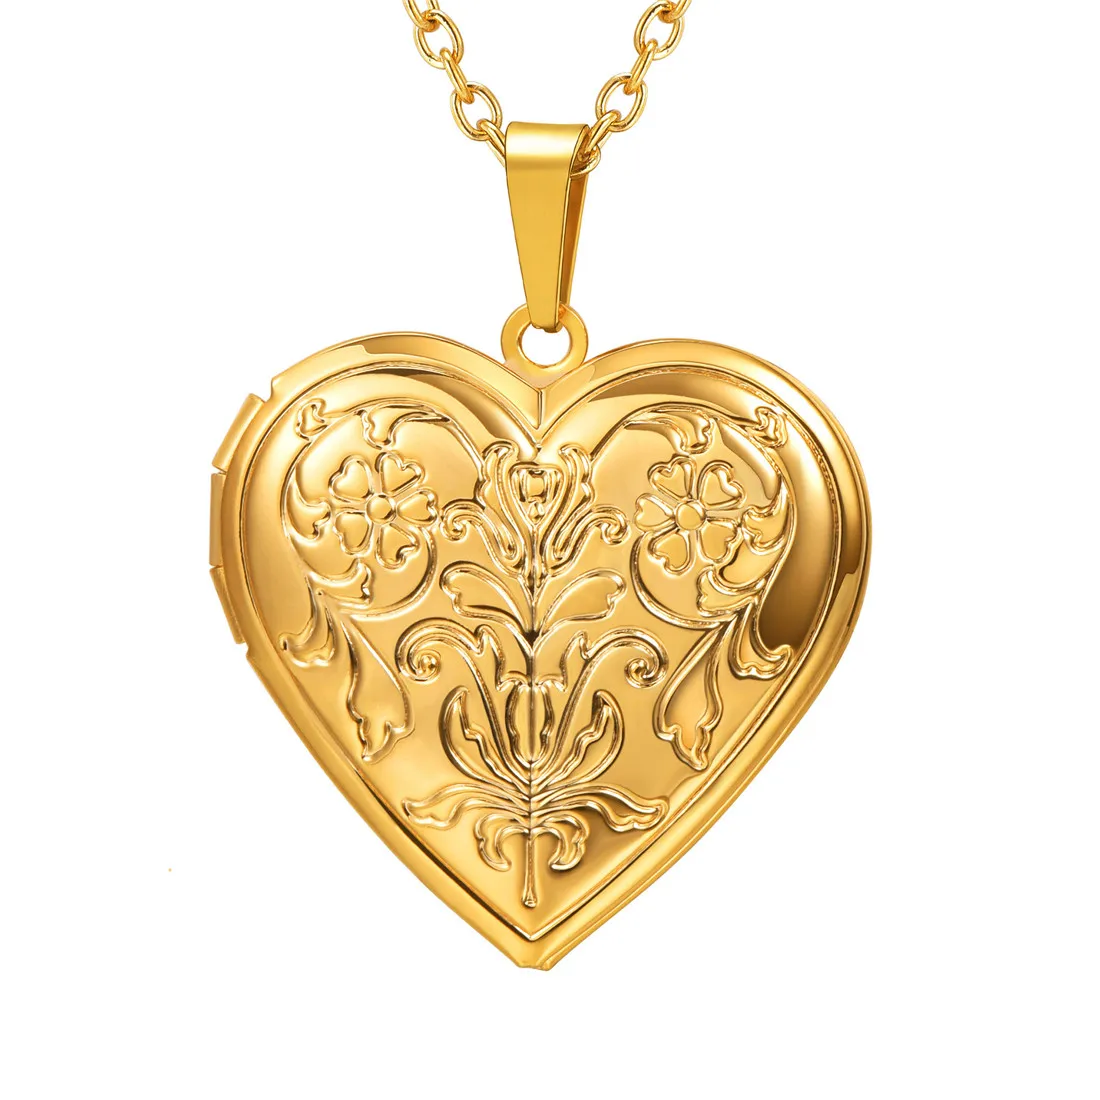 Heart Locket Necklace - U7 Love Heart Necklace Gifts Girls P318 Pendant  Women - Aliexpress